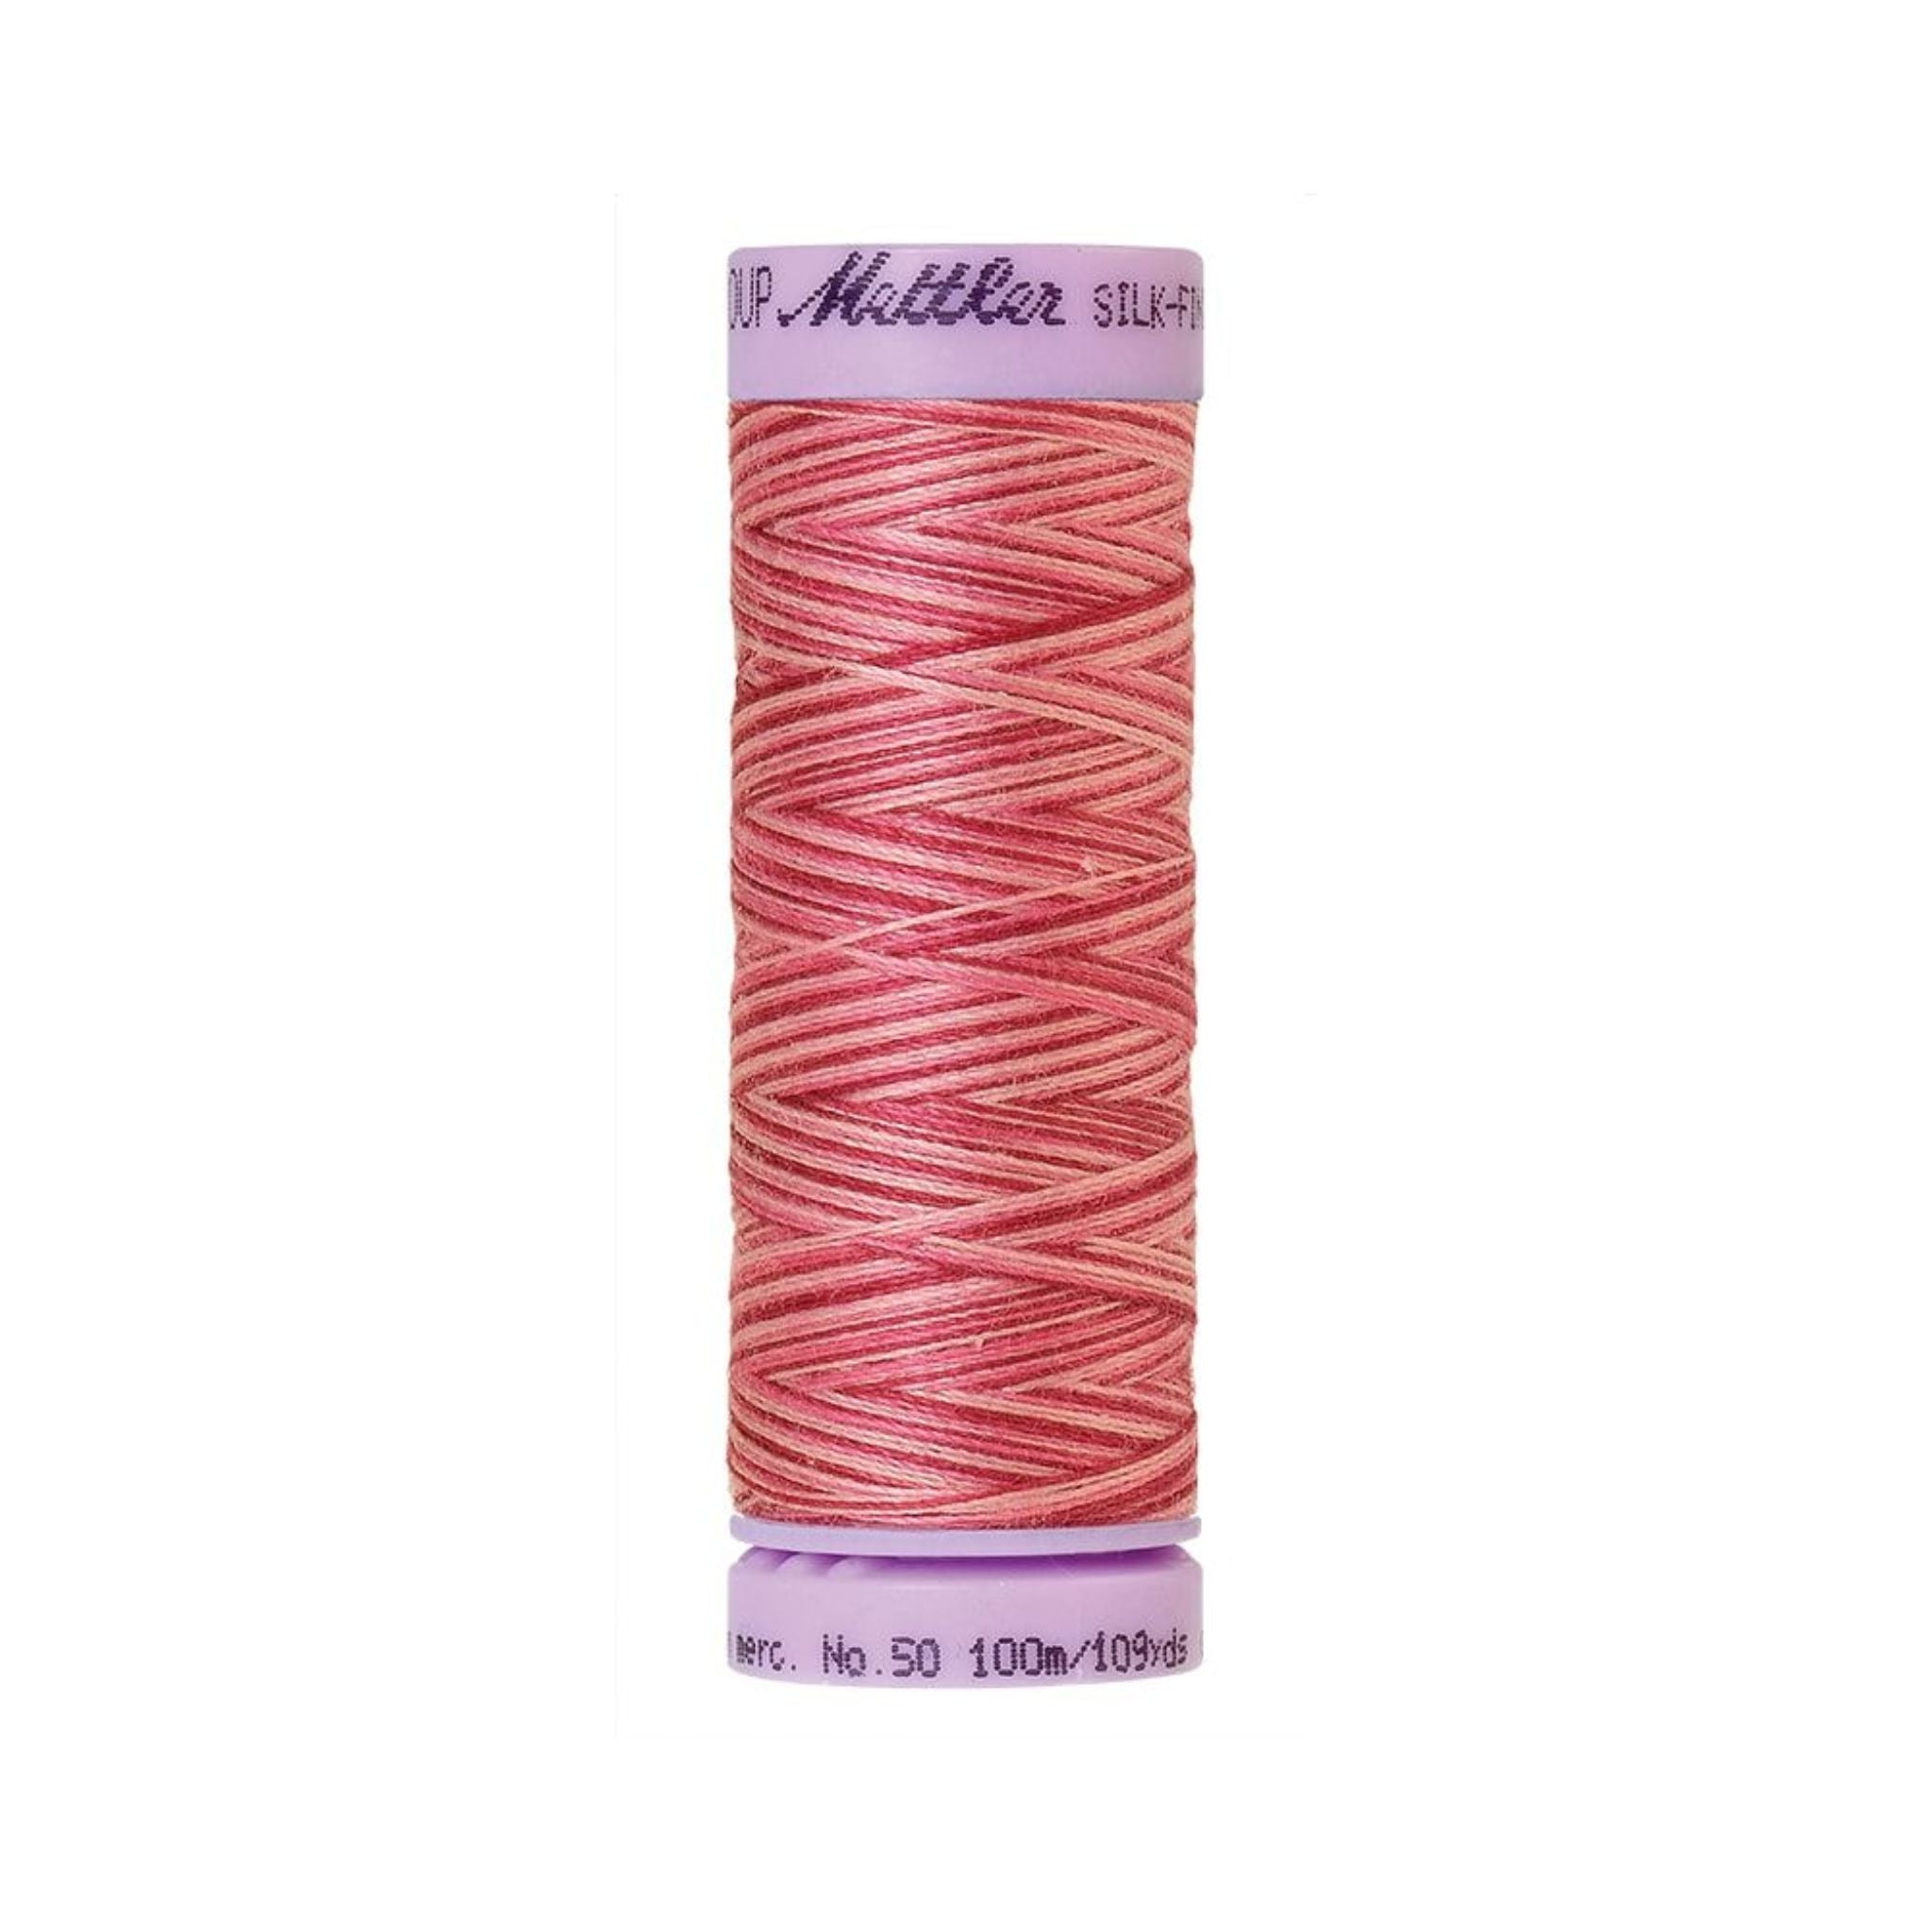 Cranberry Crush Silk Thread Finish Multi Colour Cot 50 100m - 9846 Mettler